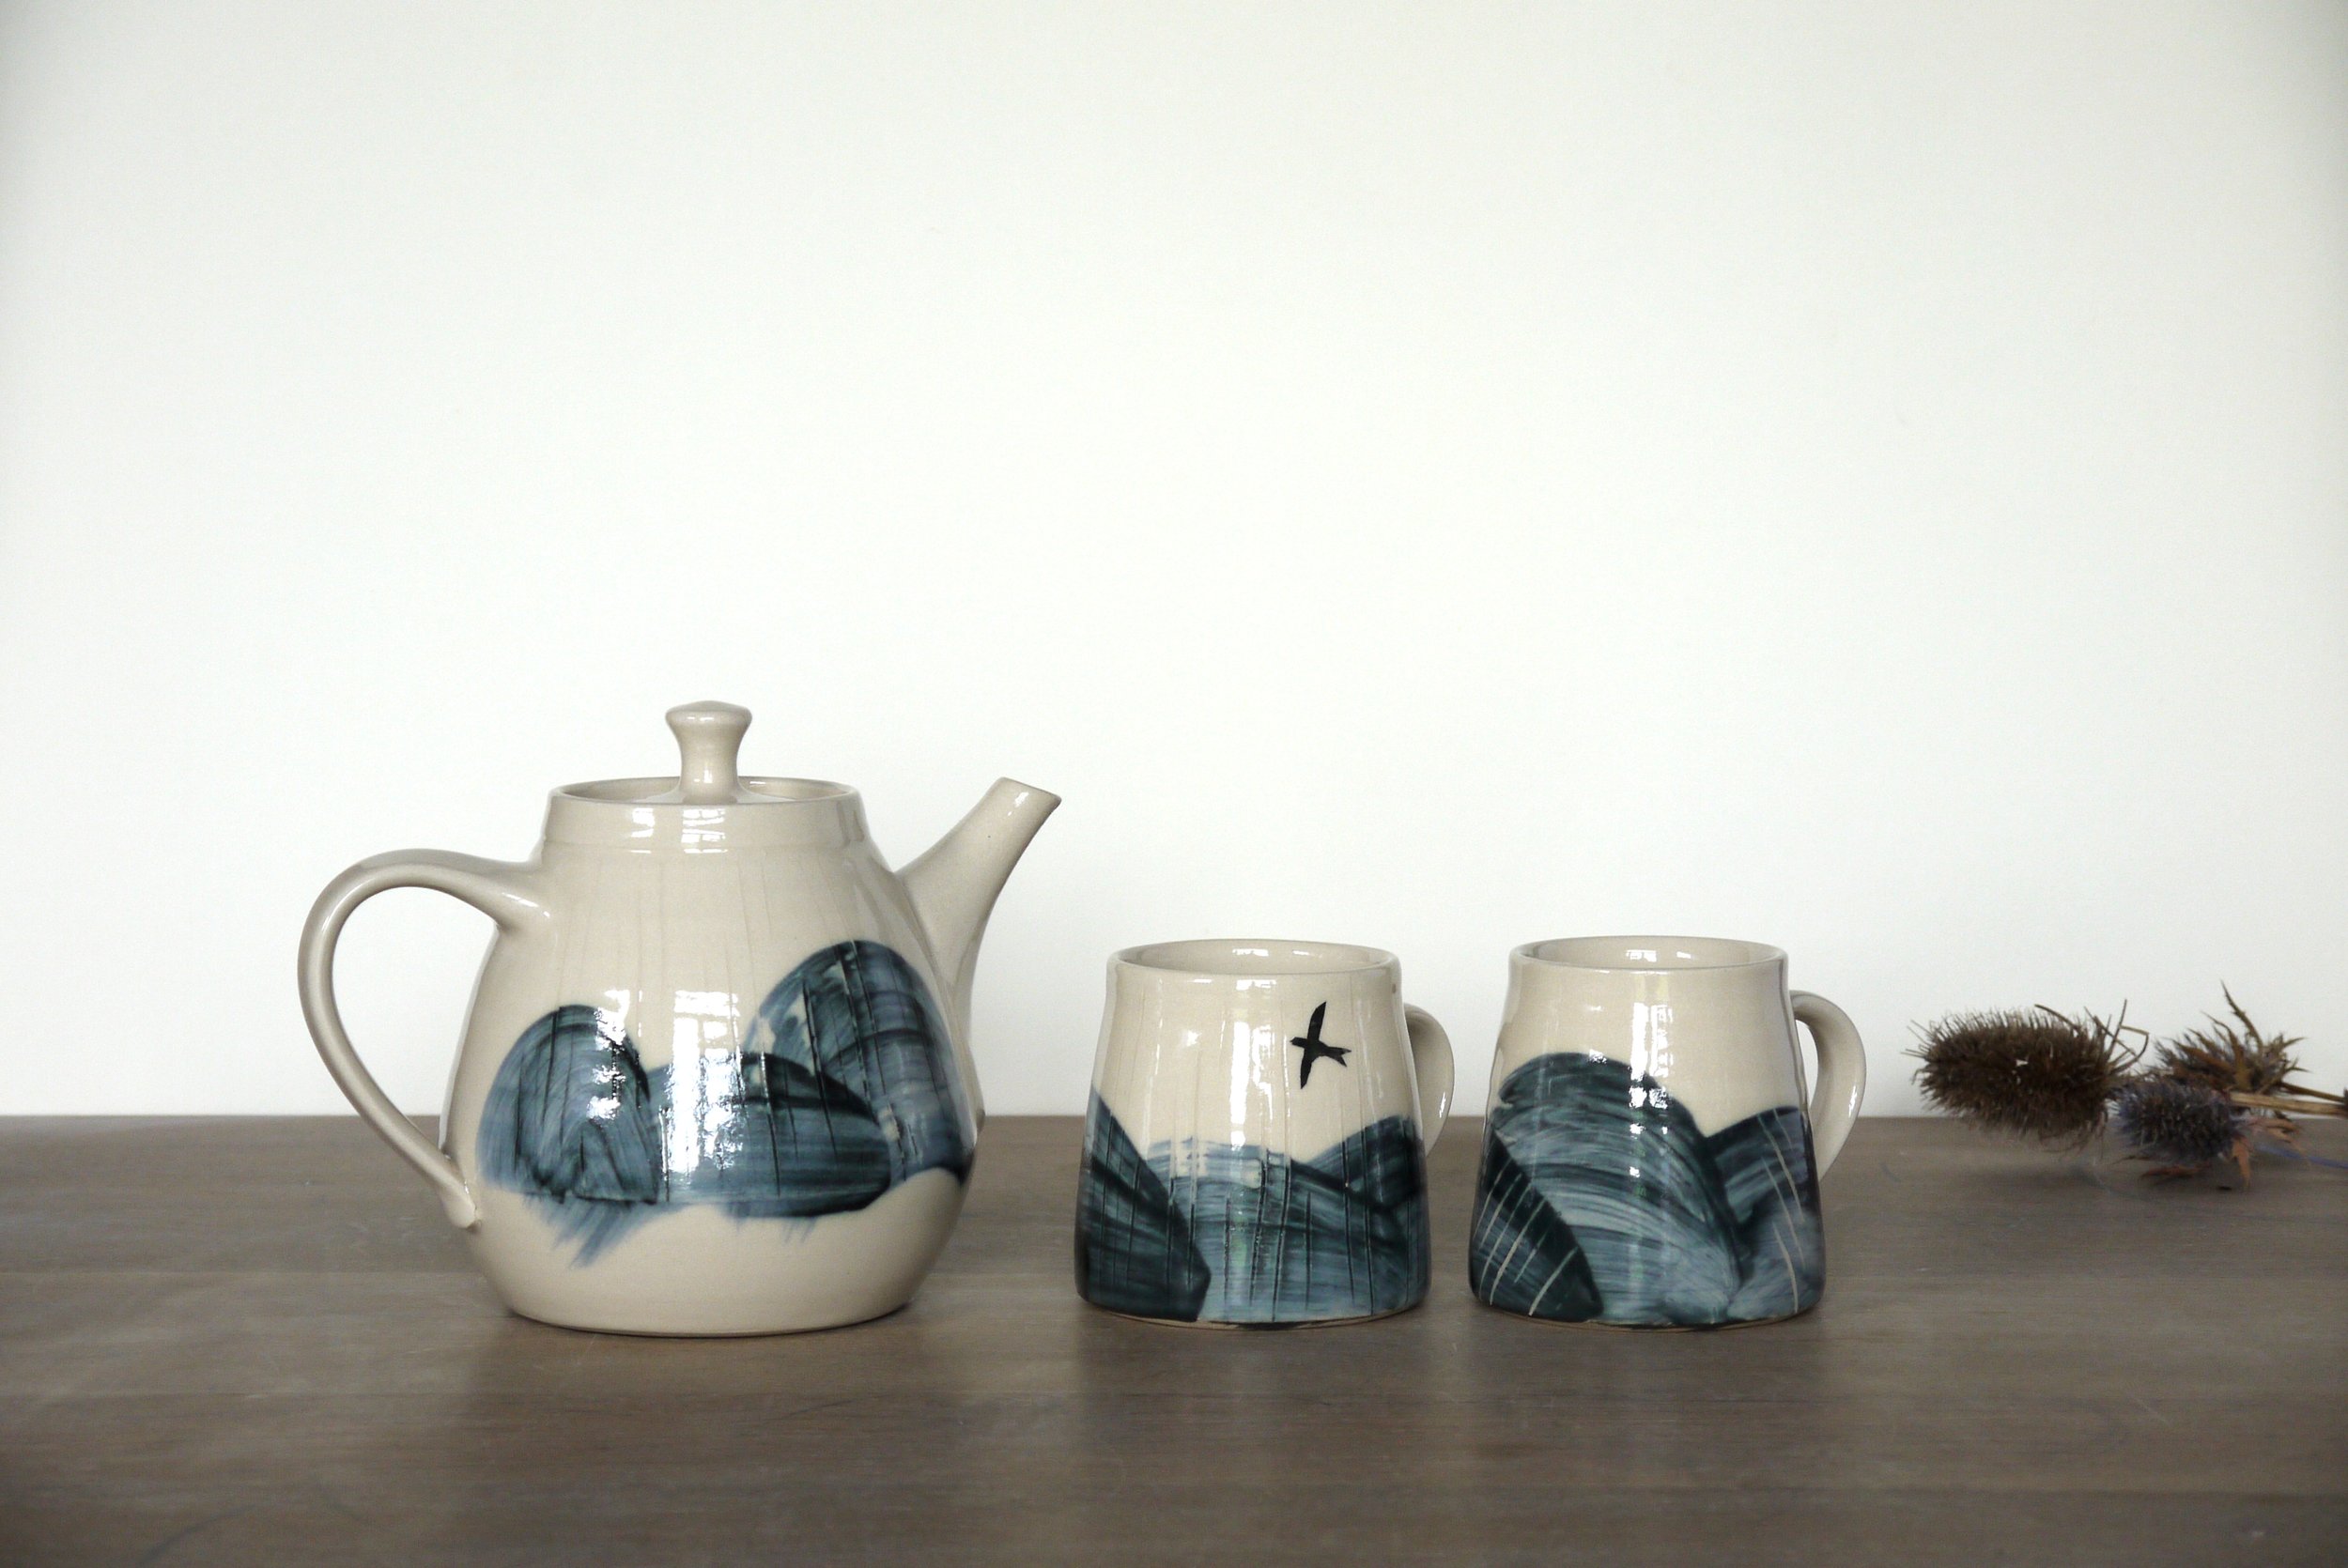 Large teapot and tea mugs